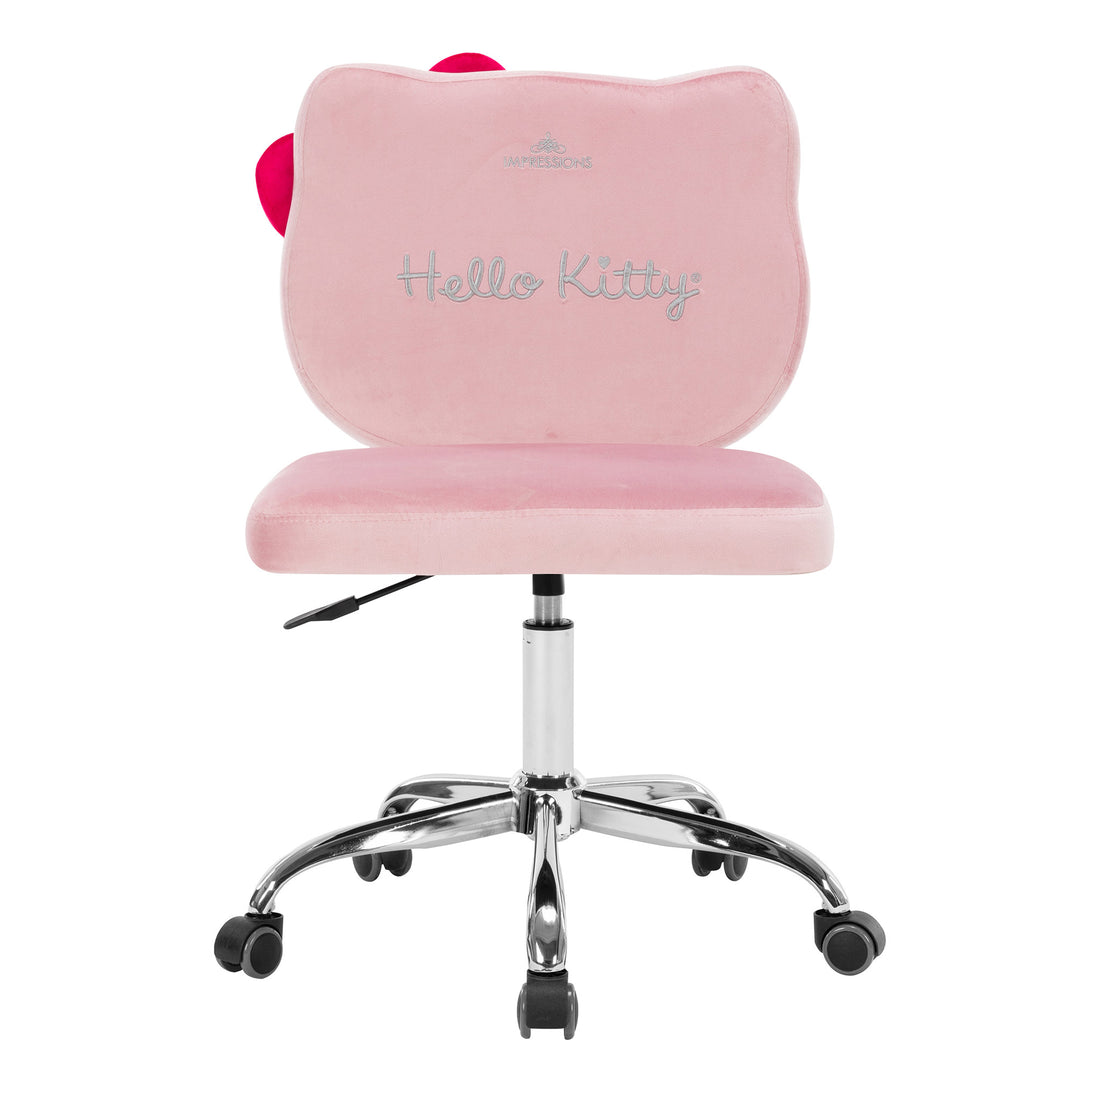 hello kitty impressions vanity chair  Hello kitty items, Hello kitty  clothes, Hello kitty house